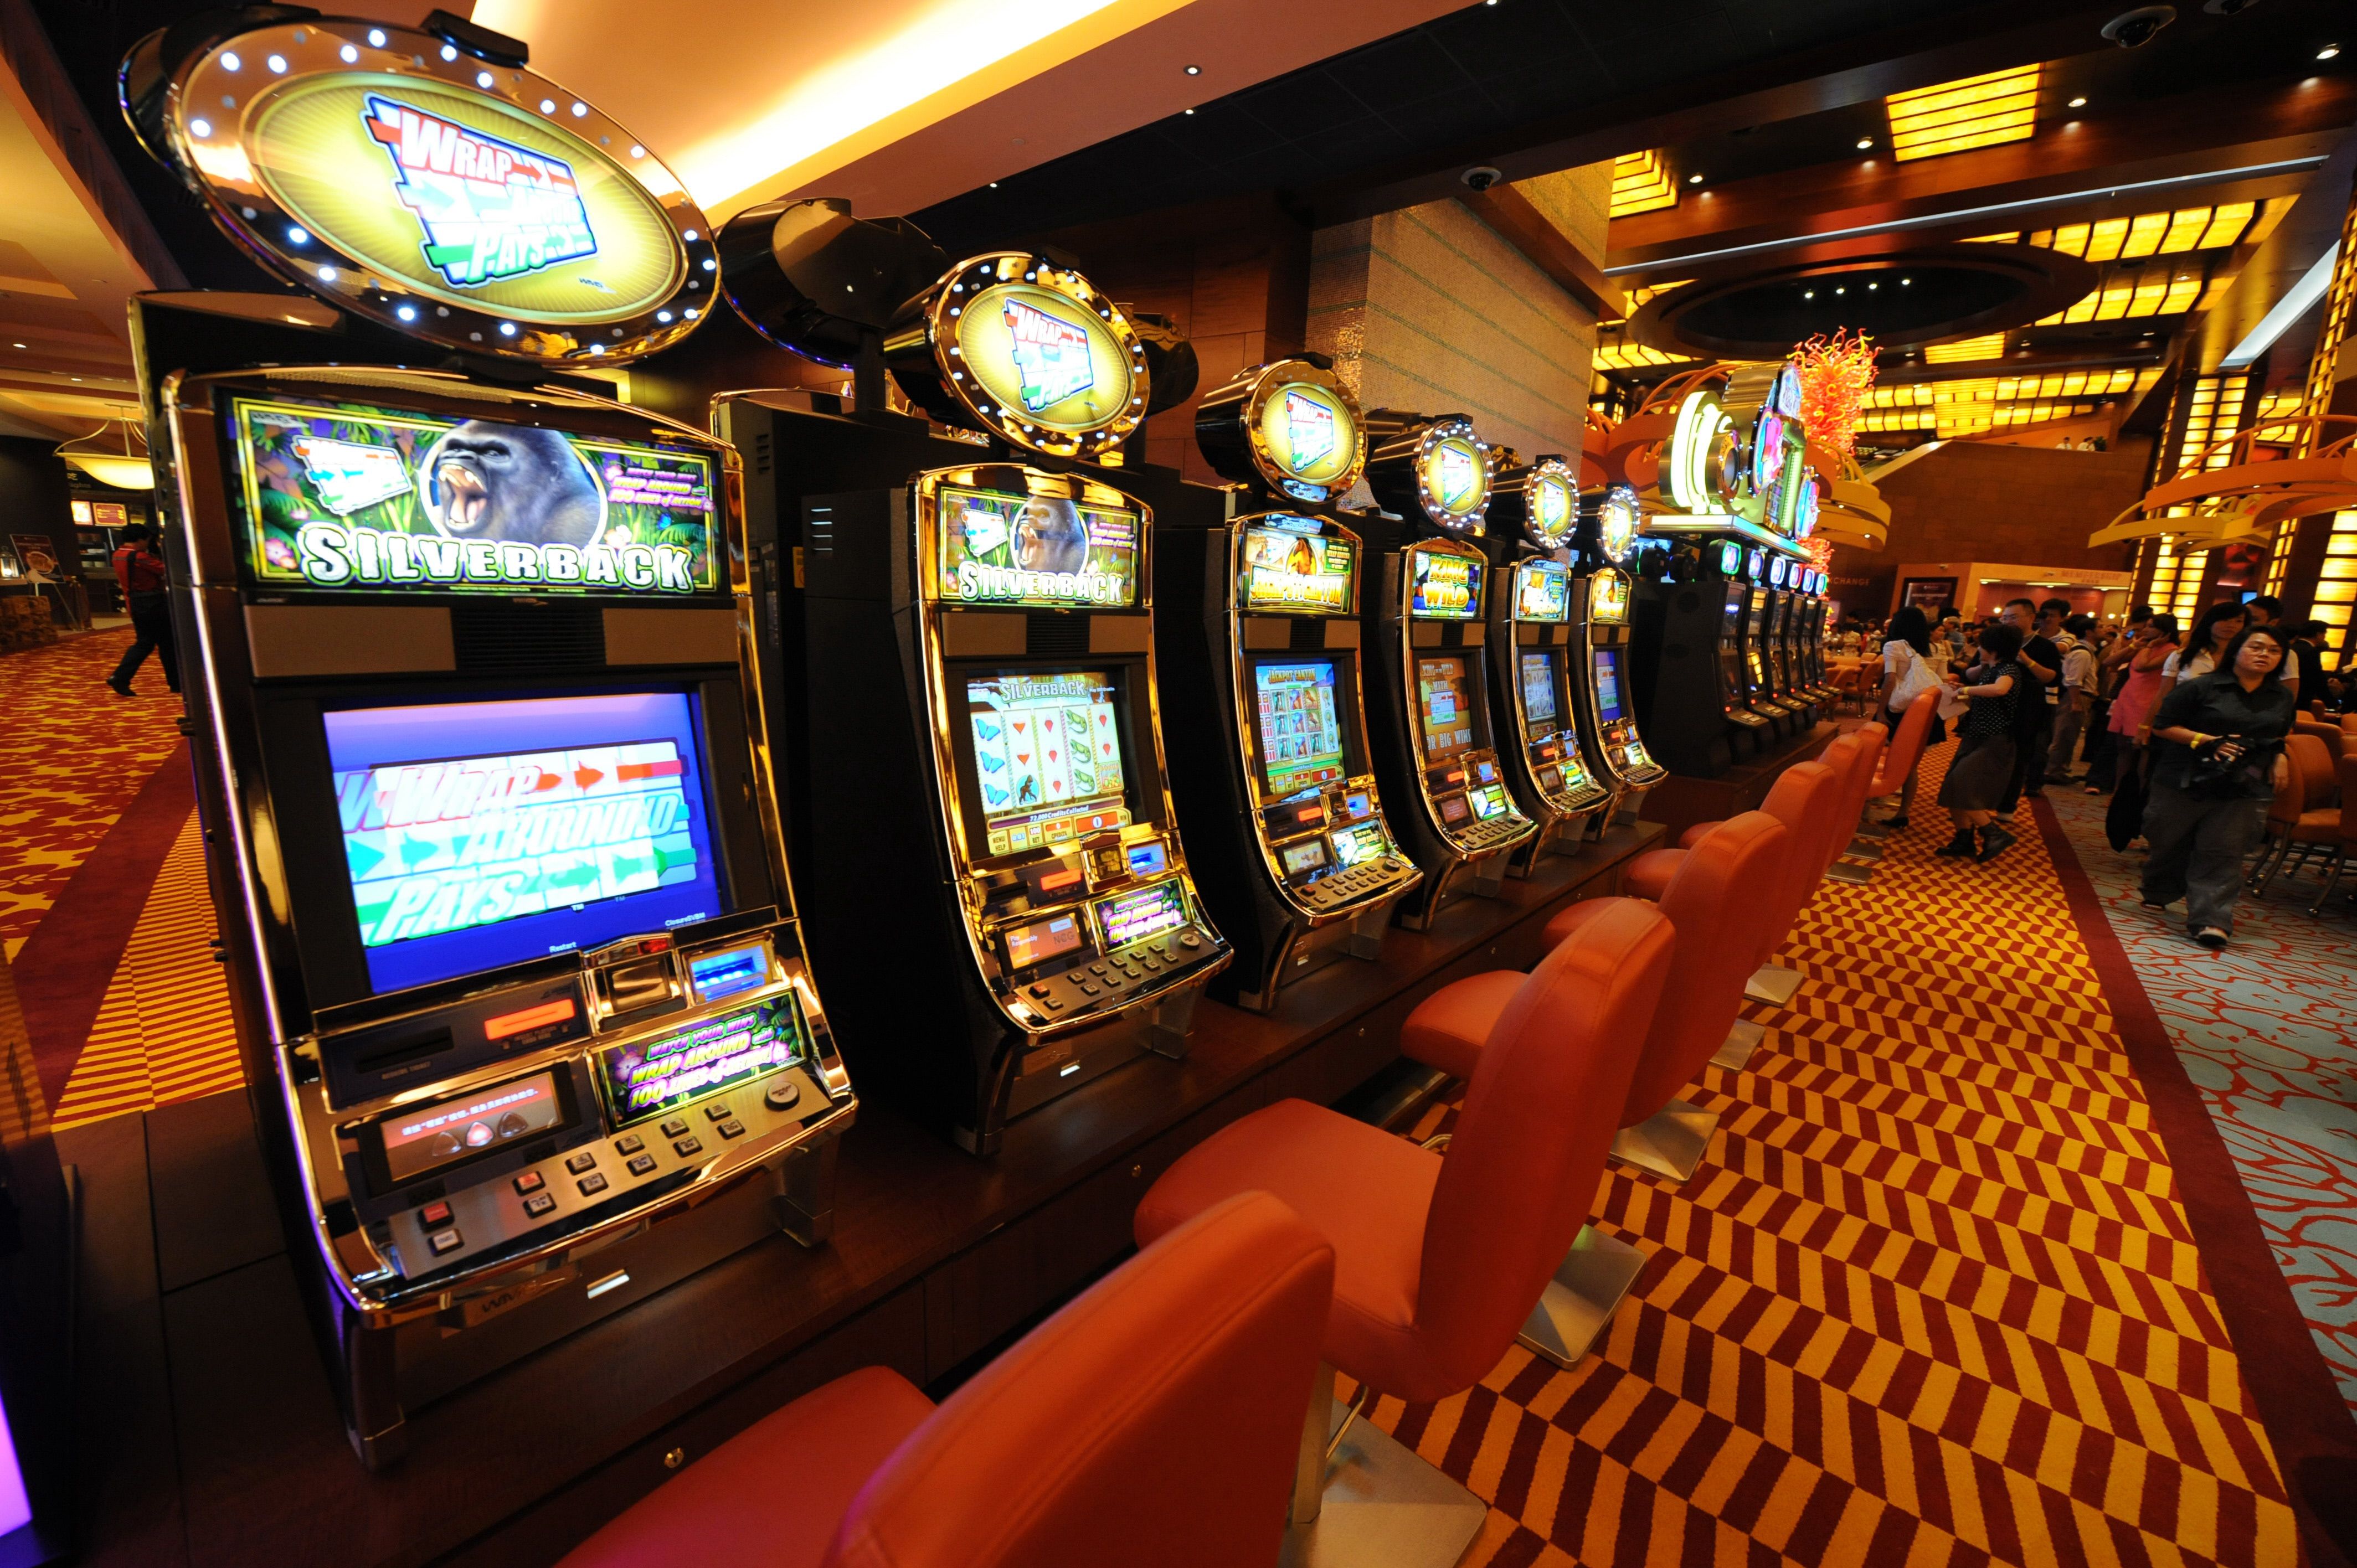 Opinion: The harm that casinos do | CNN